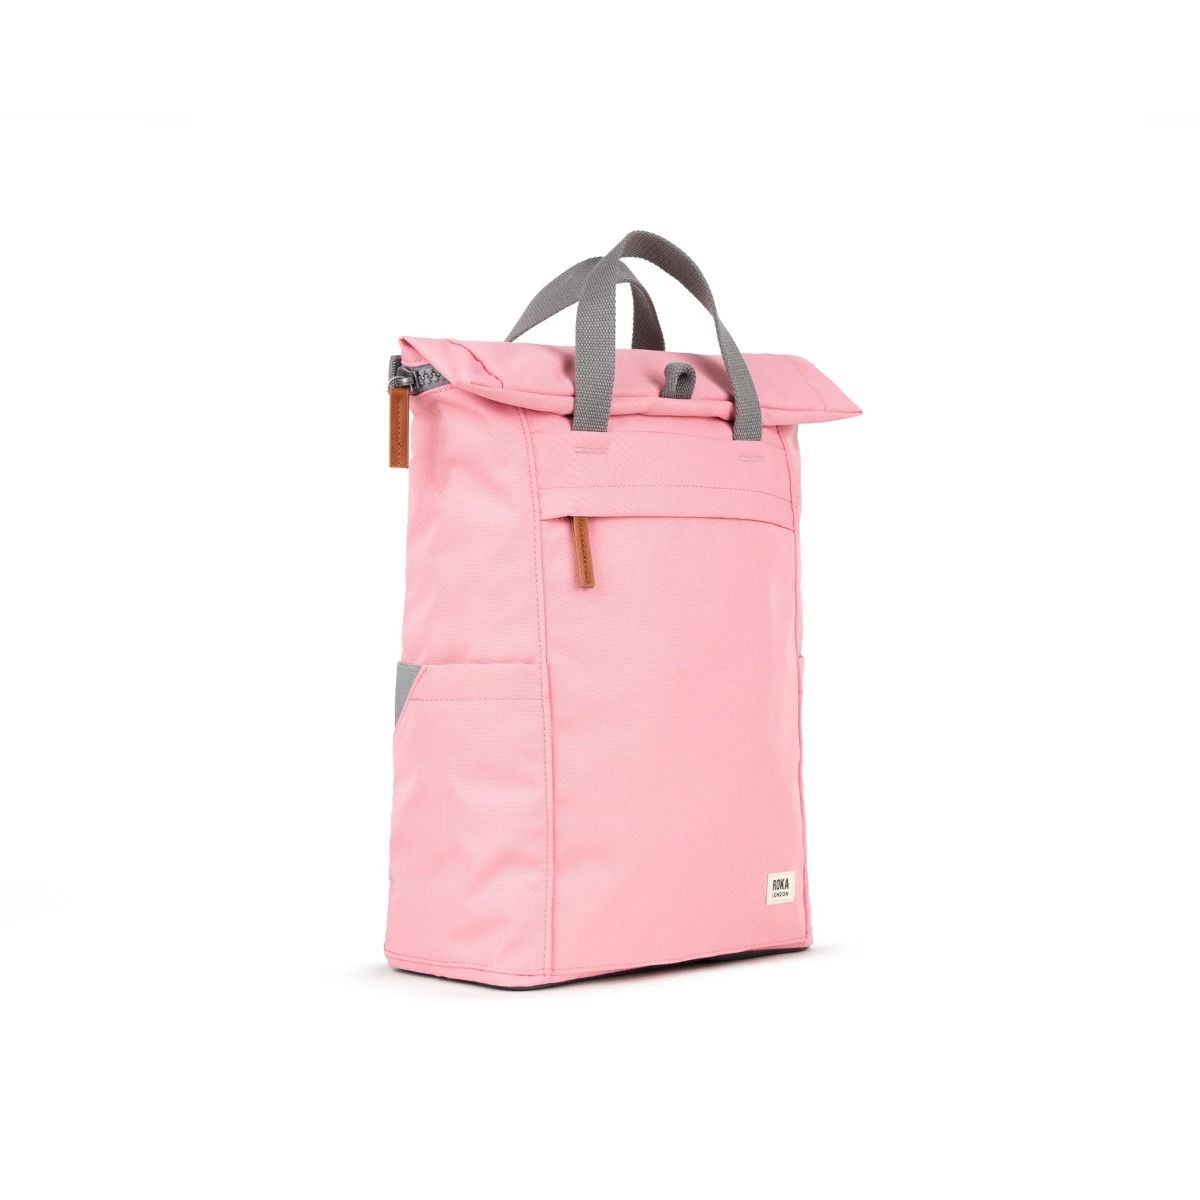 Roka Finchley A medium Vegan Bag in Rose colour